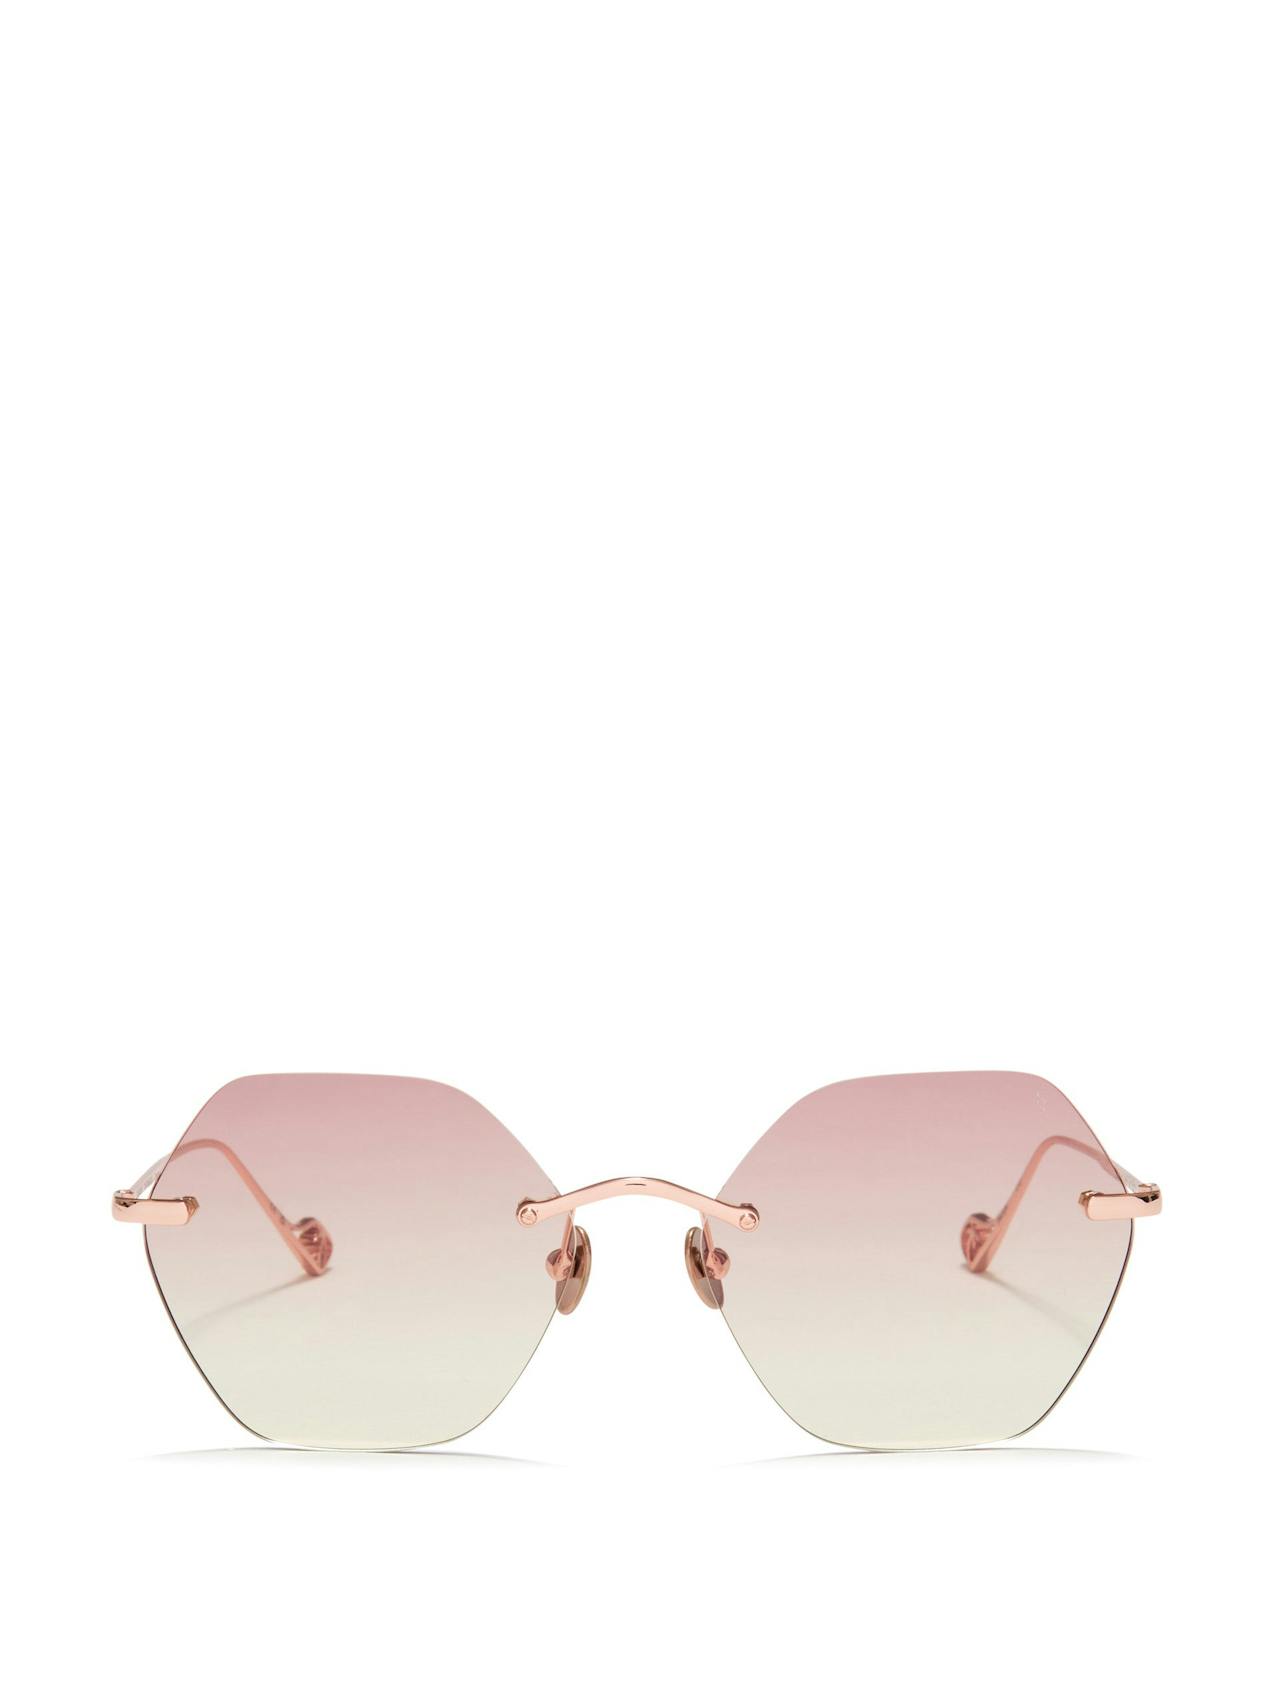 Rose gold Newport sunglasses